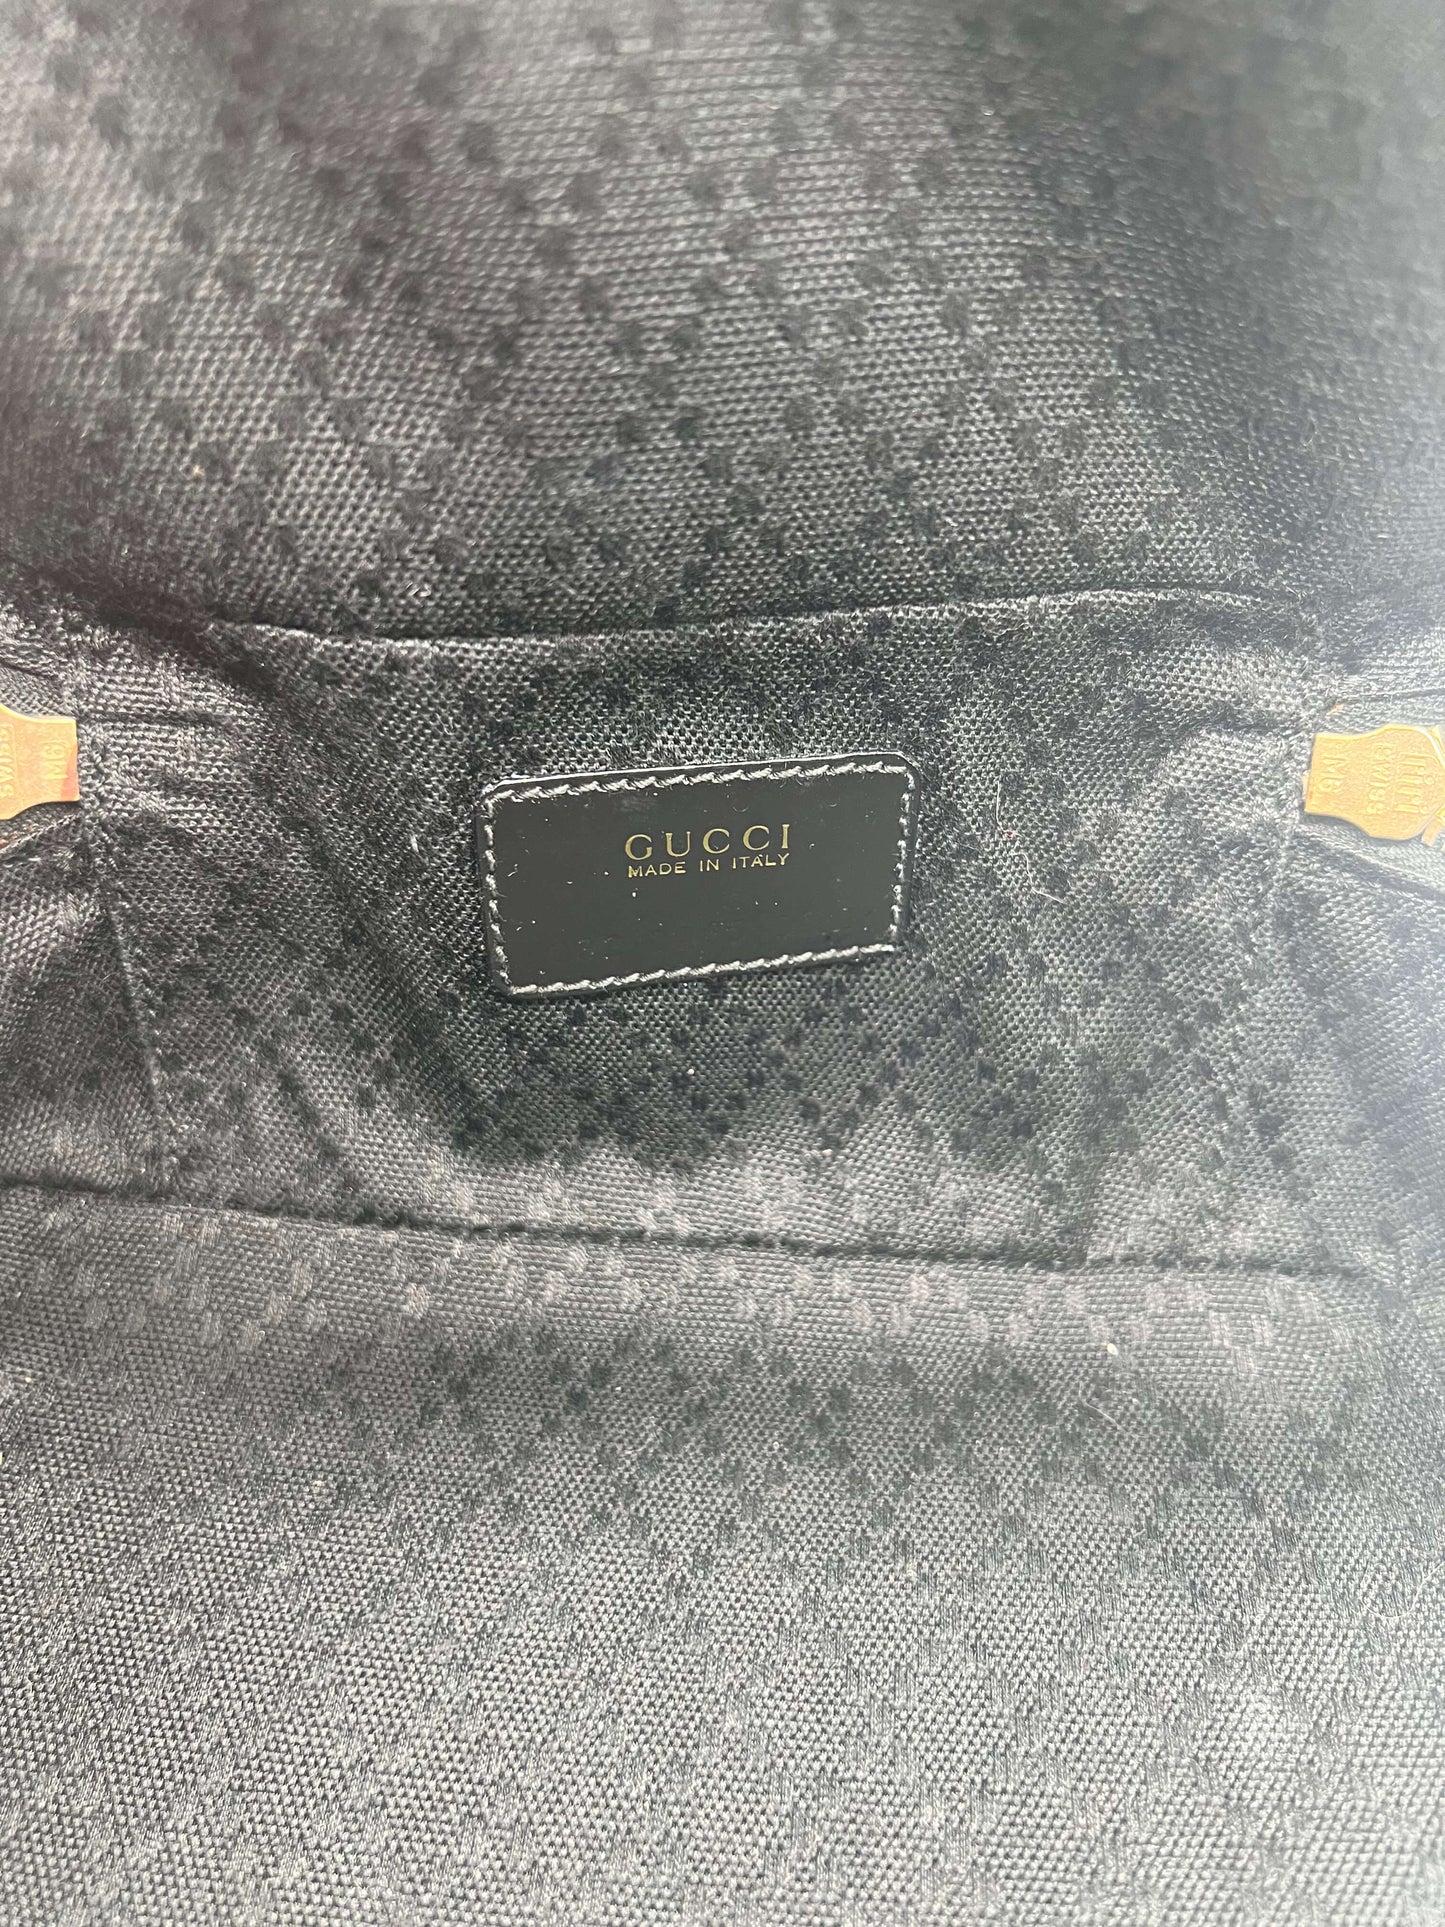 Gucci Black Patent Leather Vanity Bag